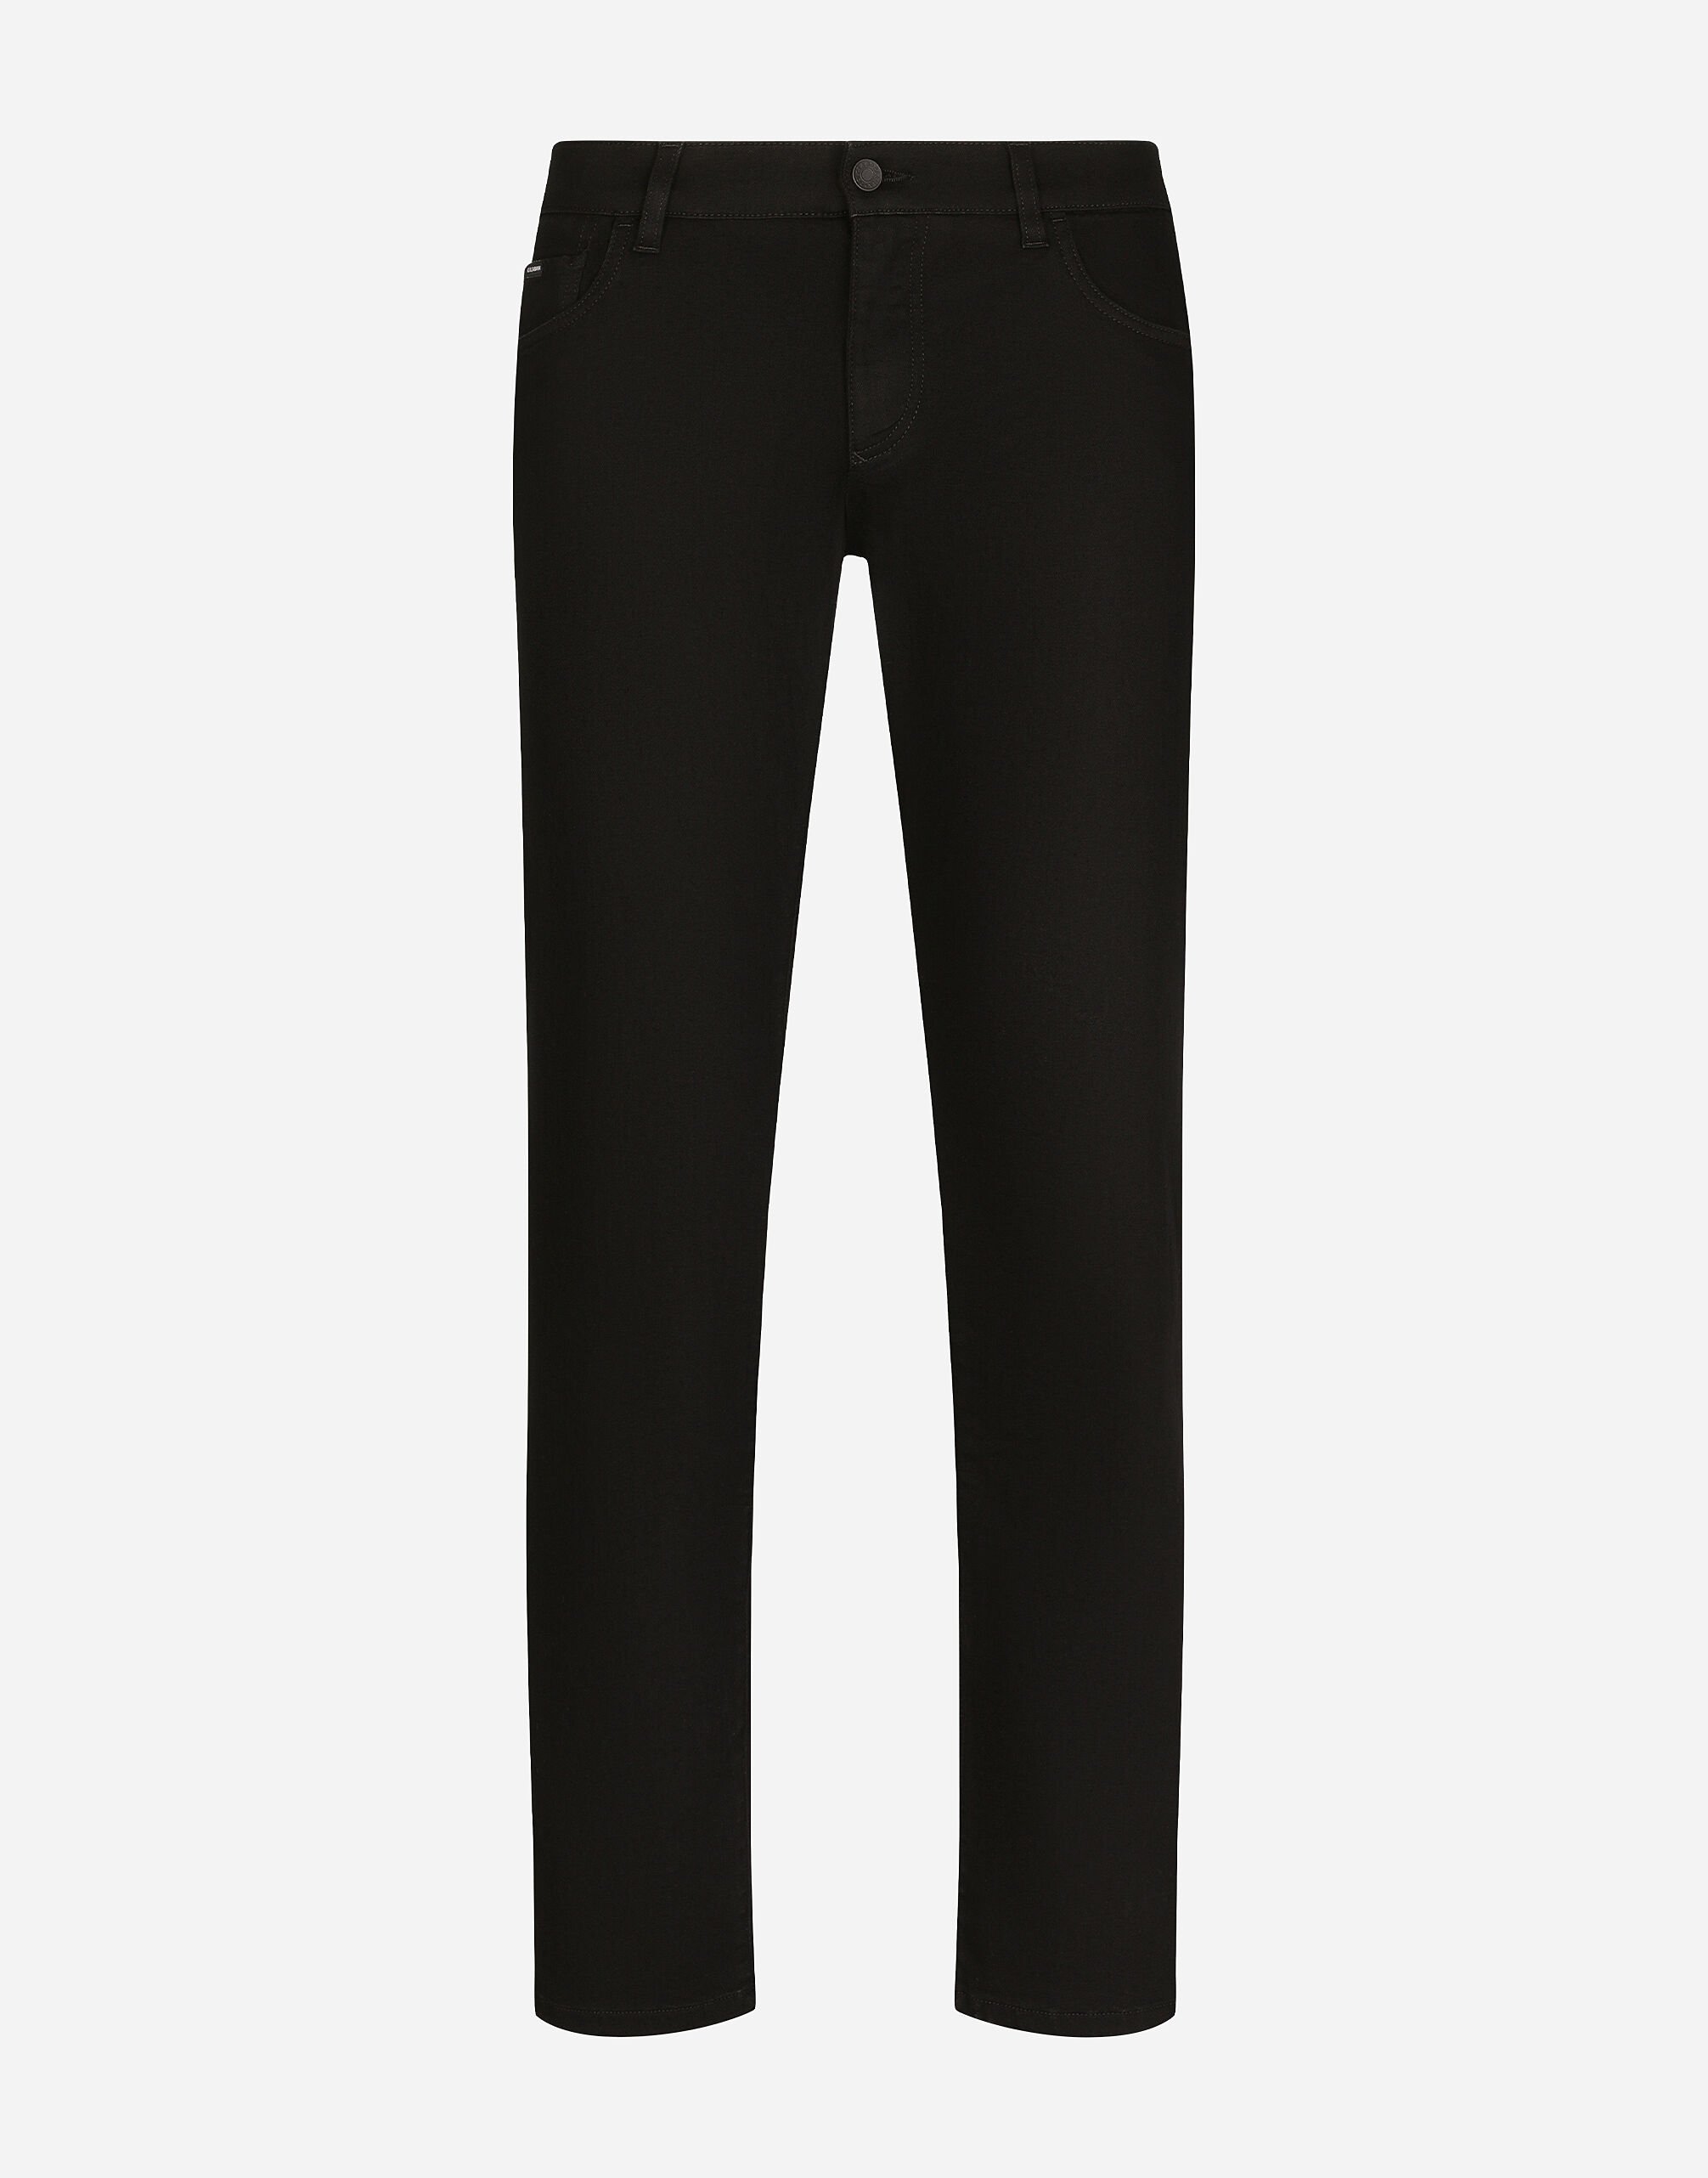 Dolce & Gabbana Black skinny stretch jeans Black A50583A8034